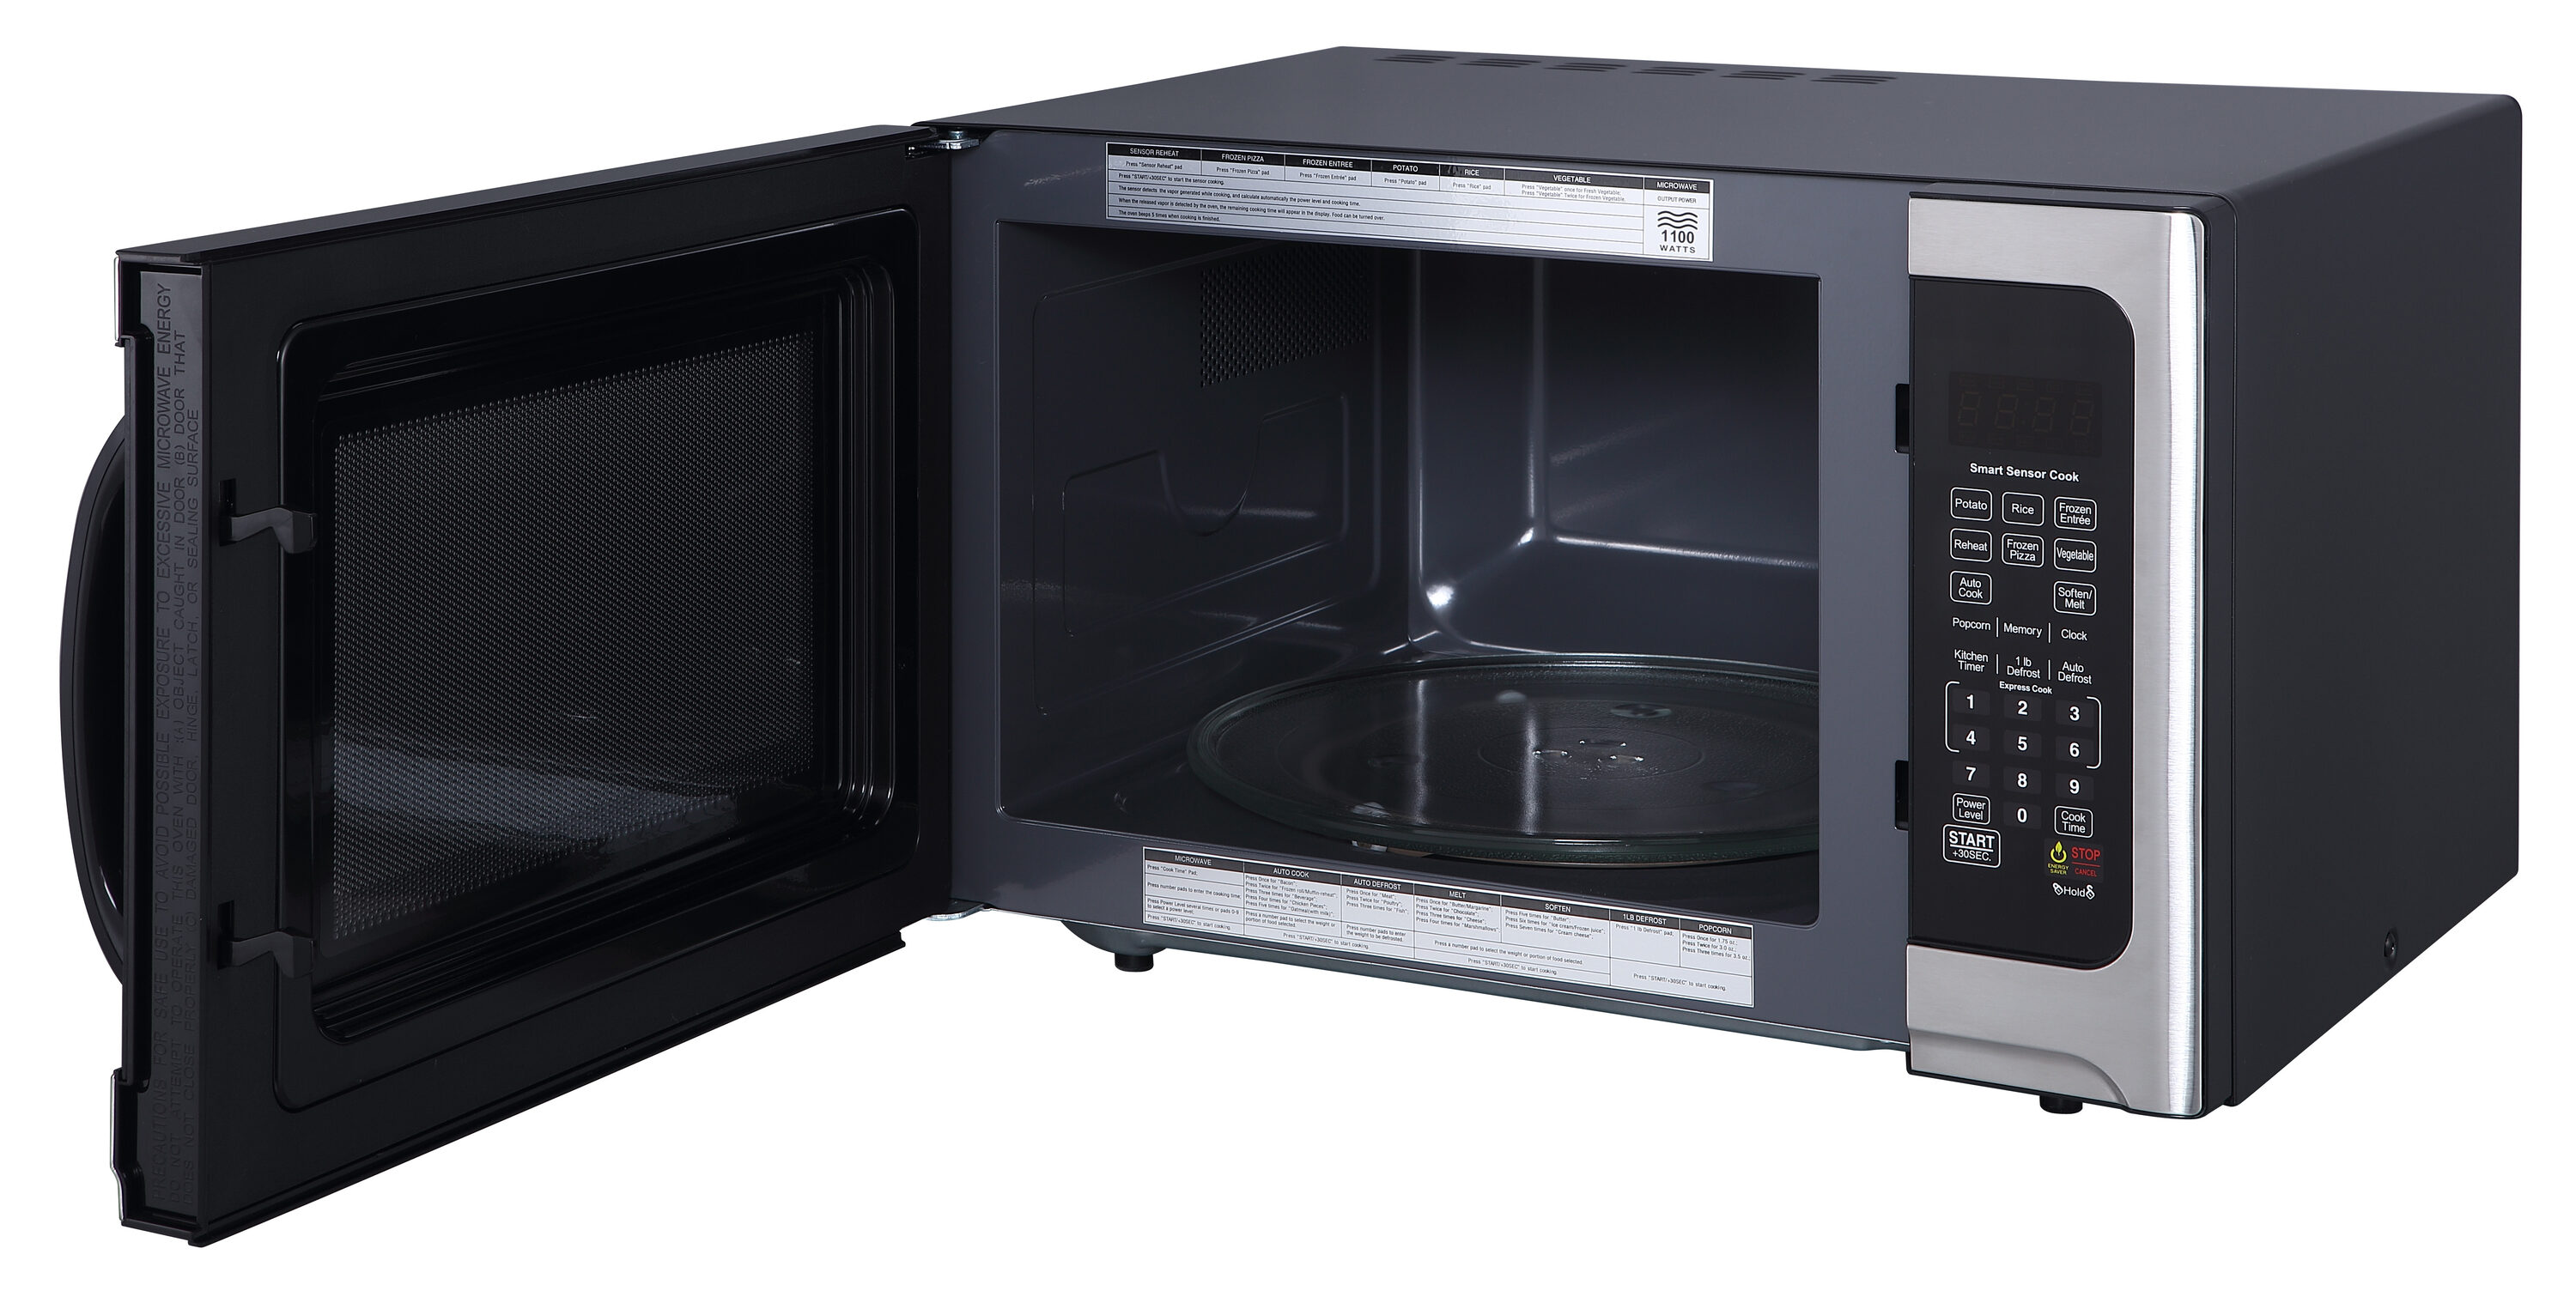 Farberware Professional 1.2 Cu. ft. 1100-Watt Microwave Oven with Sensor Cooking, Silver/Black